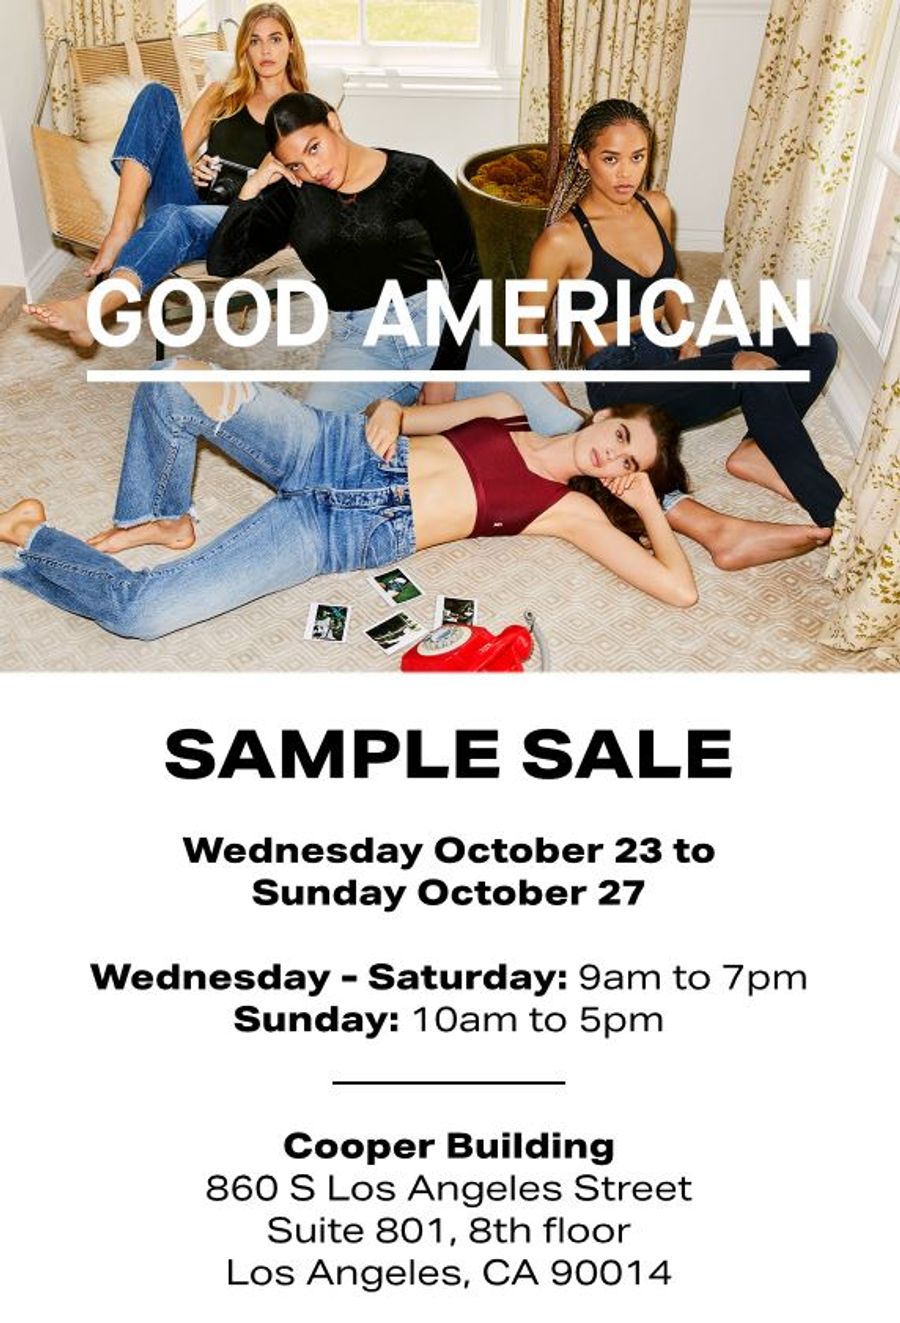 Good american sample sale flyer